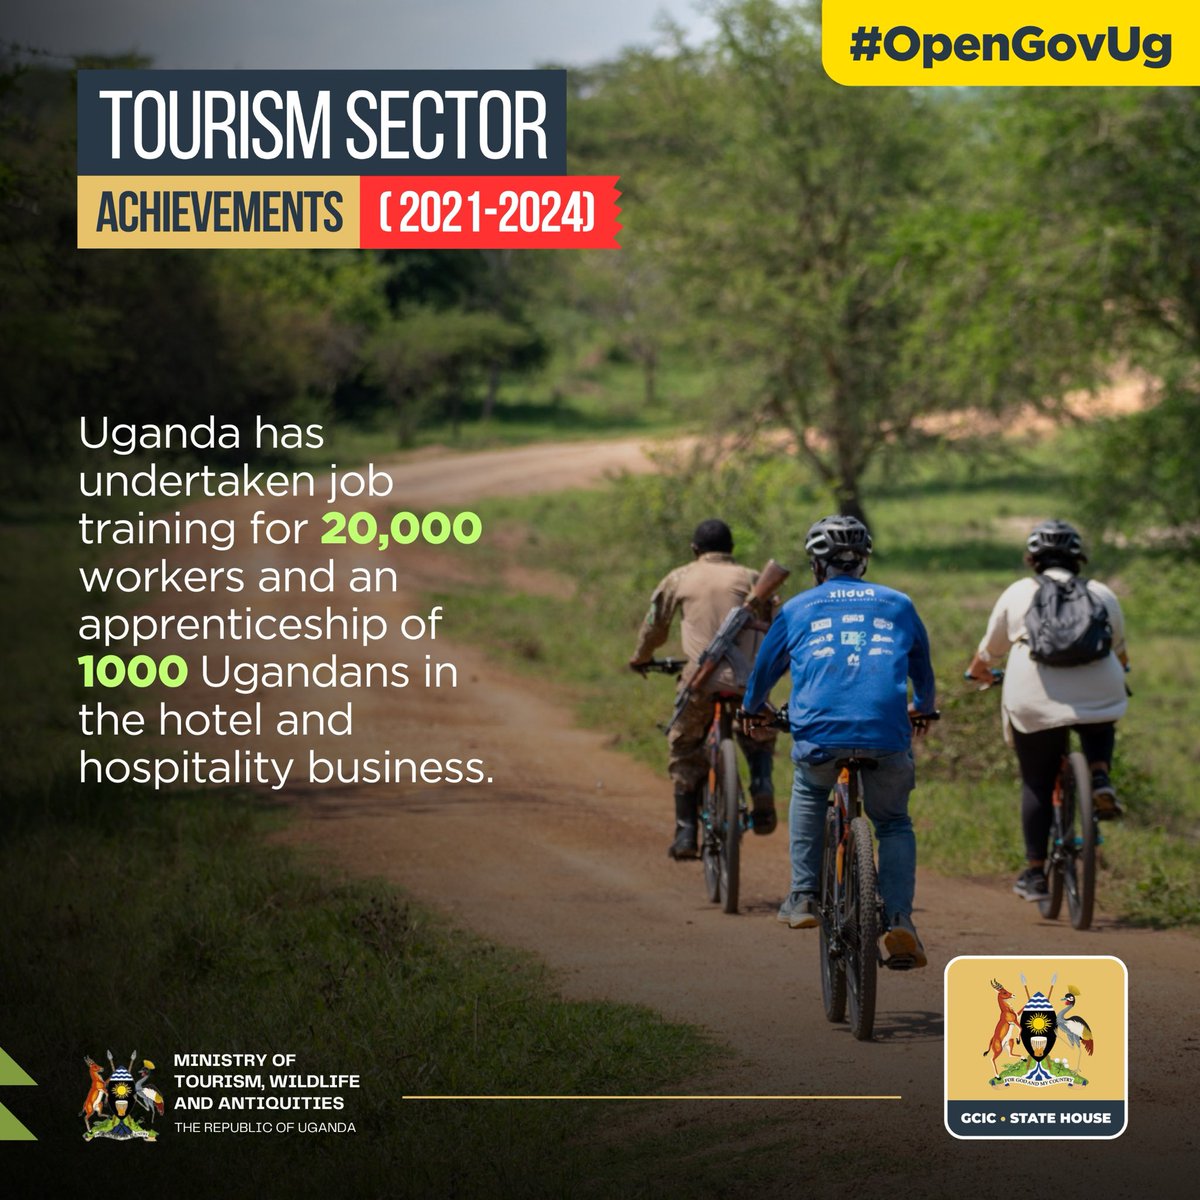 Uganda has undertaken job training for 20,000 workers and an apprenticeship of 1,000 Ugandans in the hotel & hospitality business. #OpenGovUg @LillyAjarova